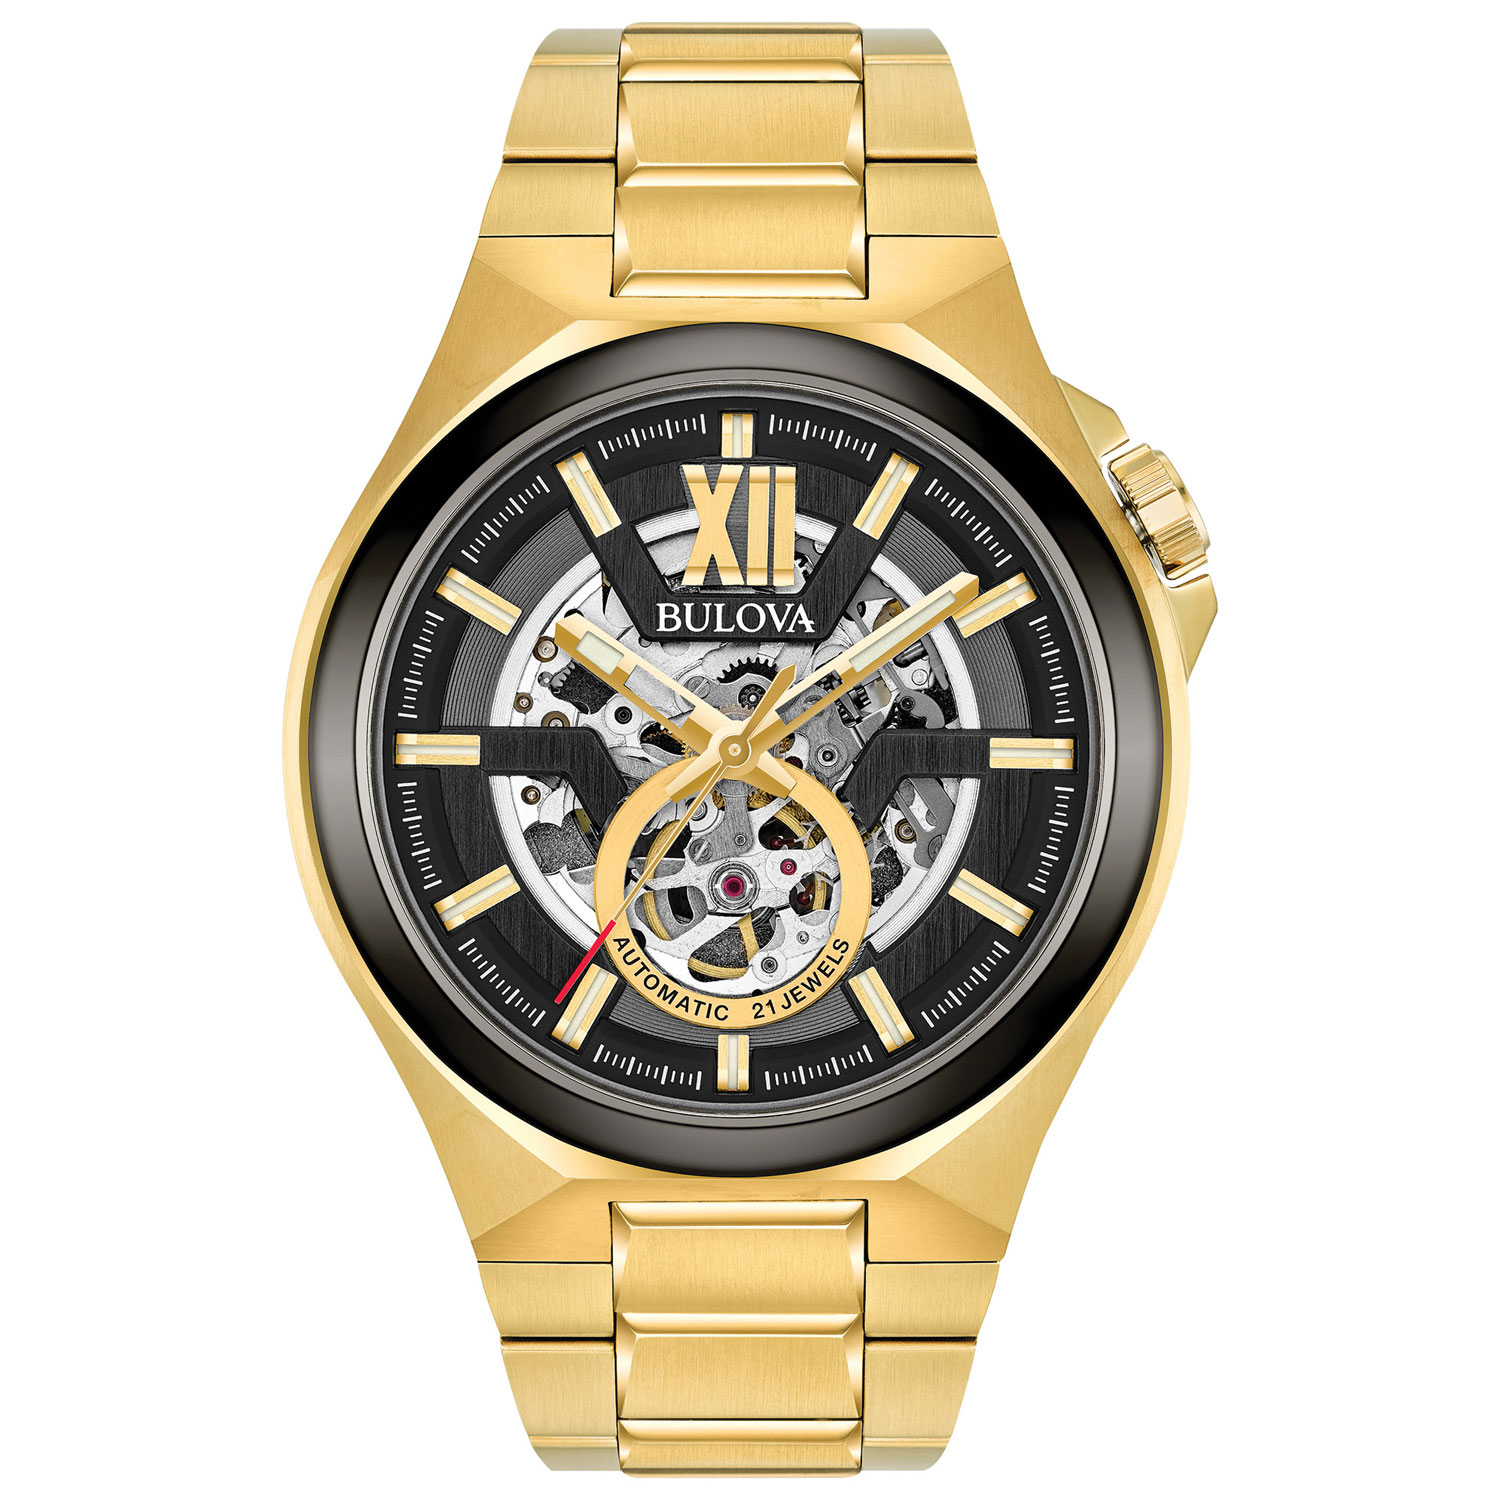 Bulova Maquina Automatic Watch 46mm Men's Watch - Gold-Tone Case, Bracelet & Black Dial